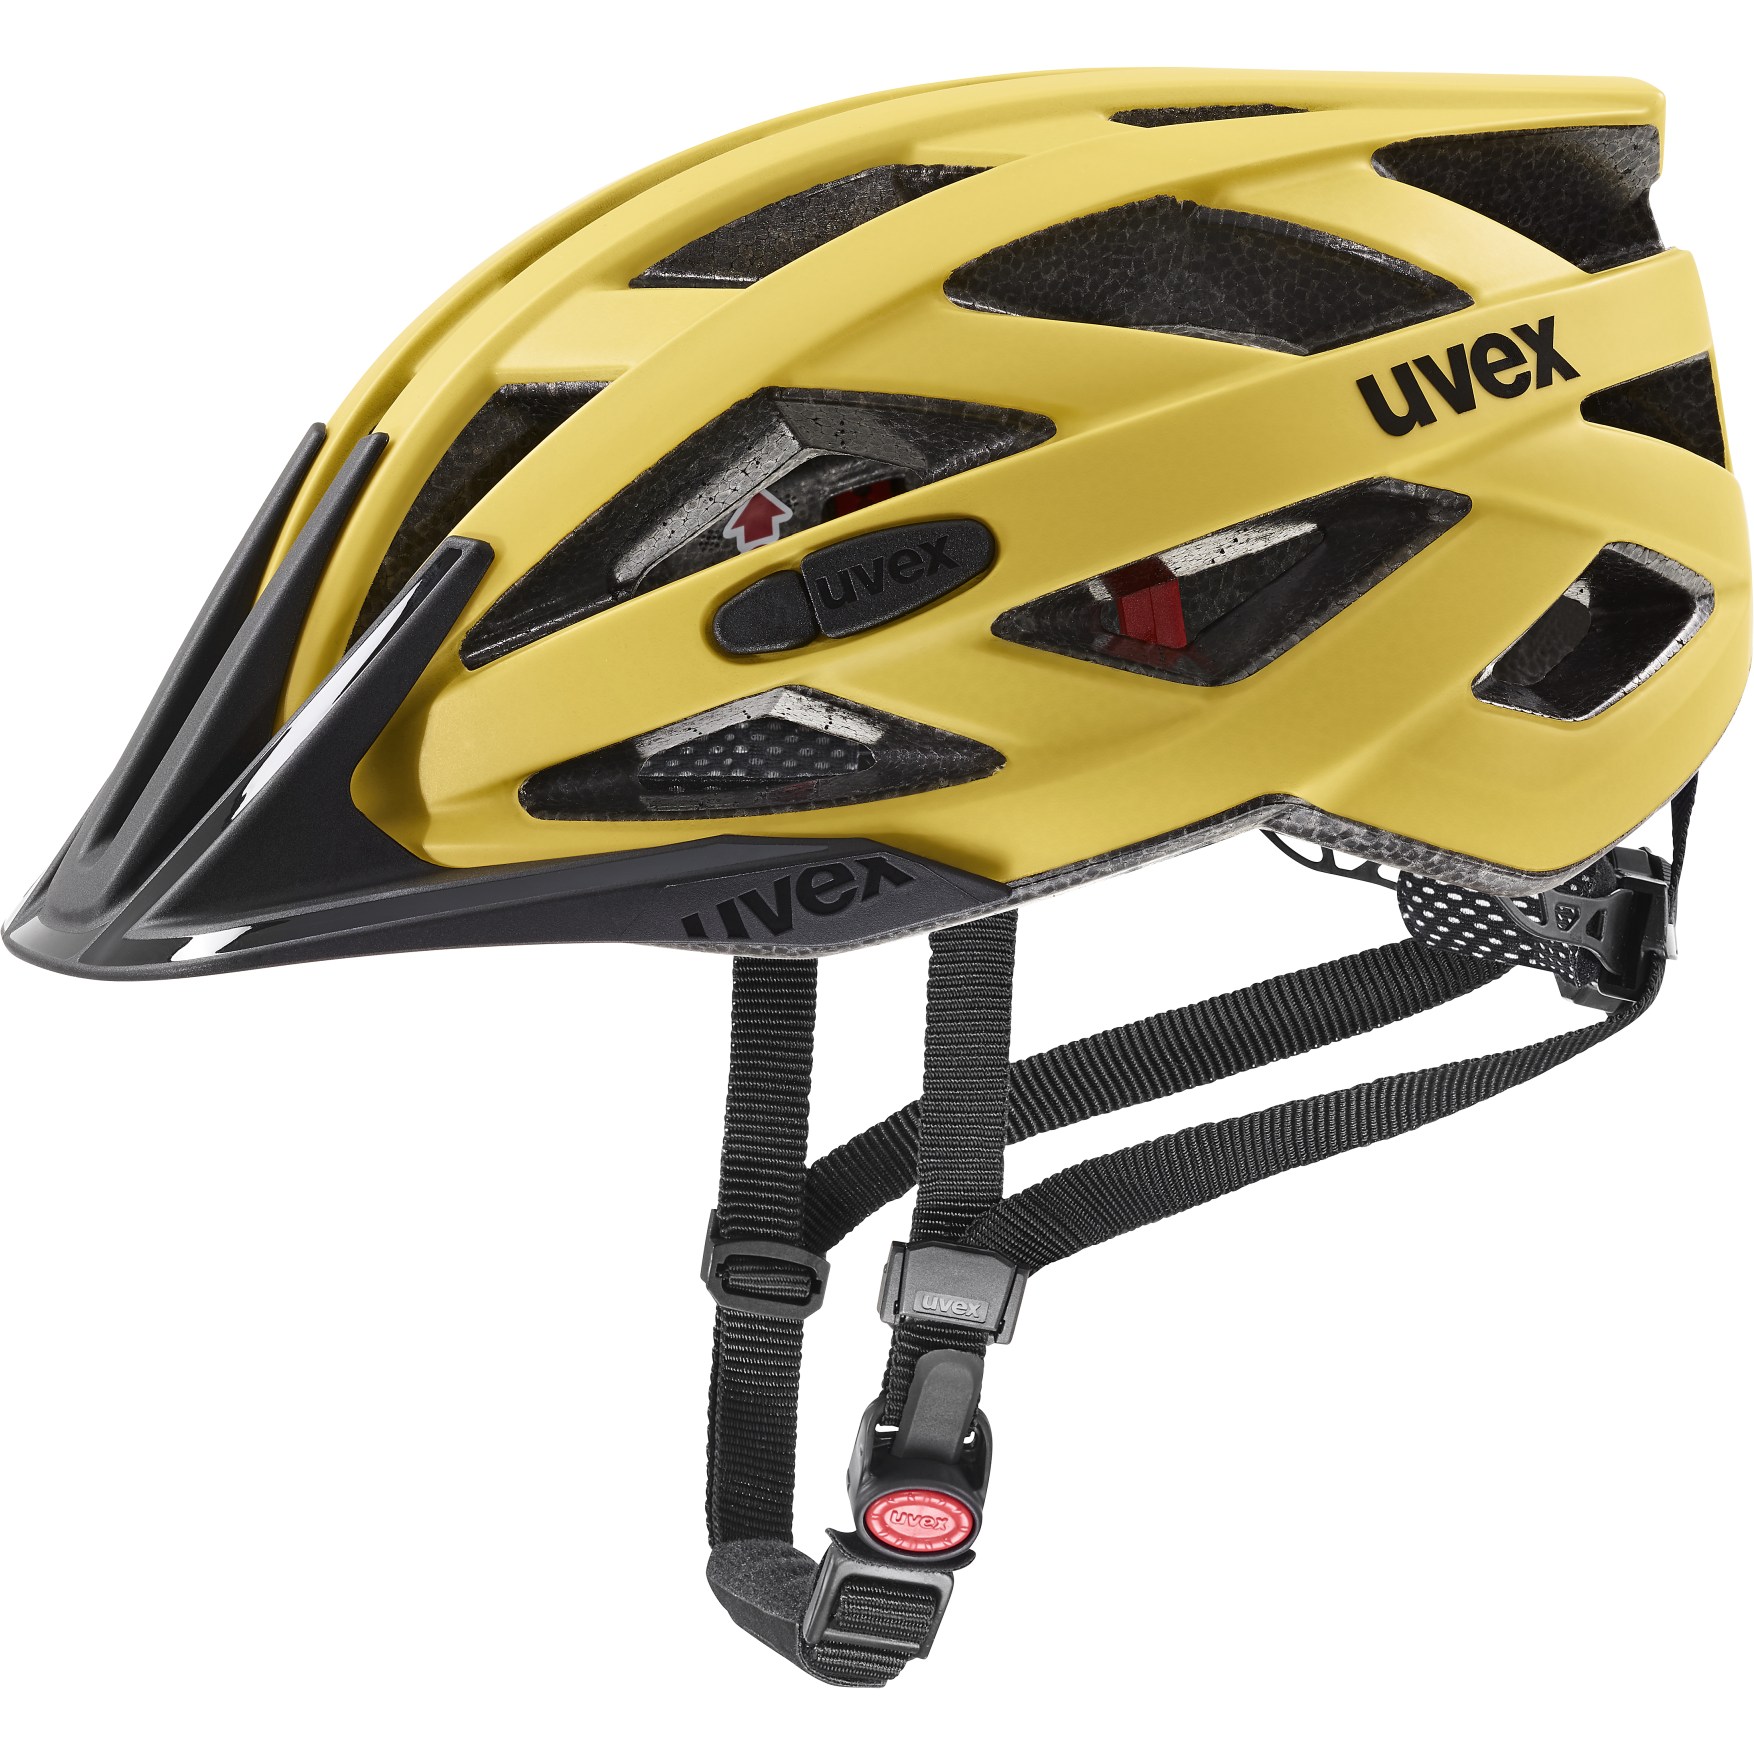 Picture of Uvex i-vo cc Helmet - sunbee matt